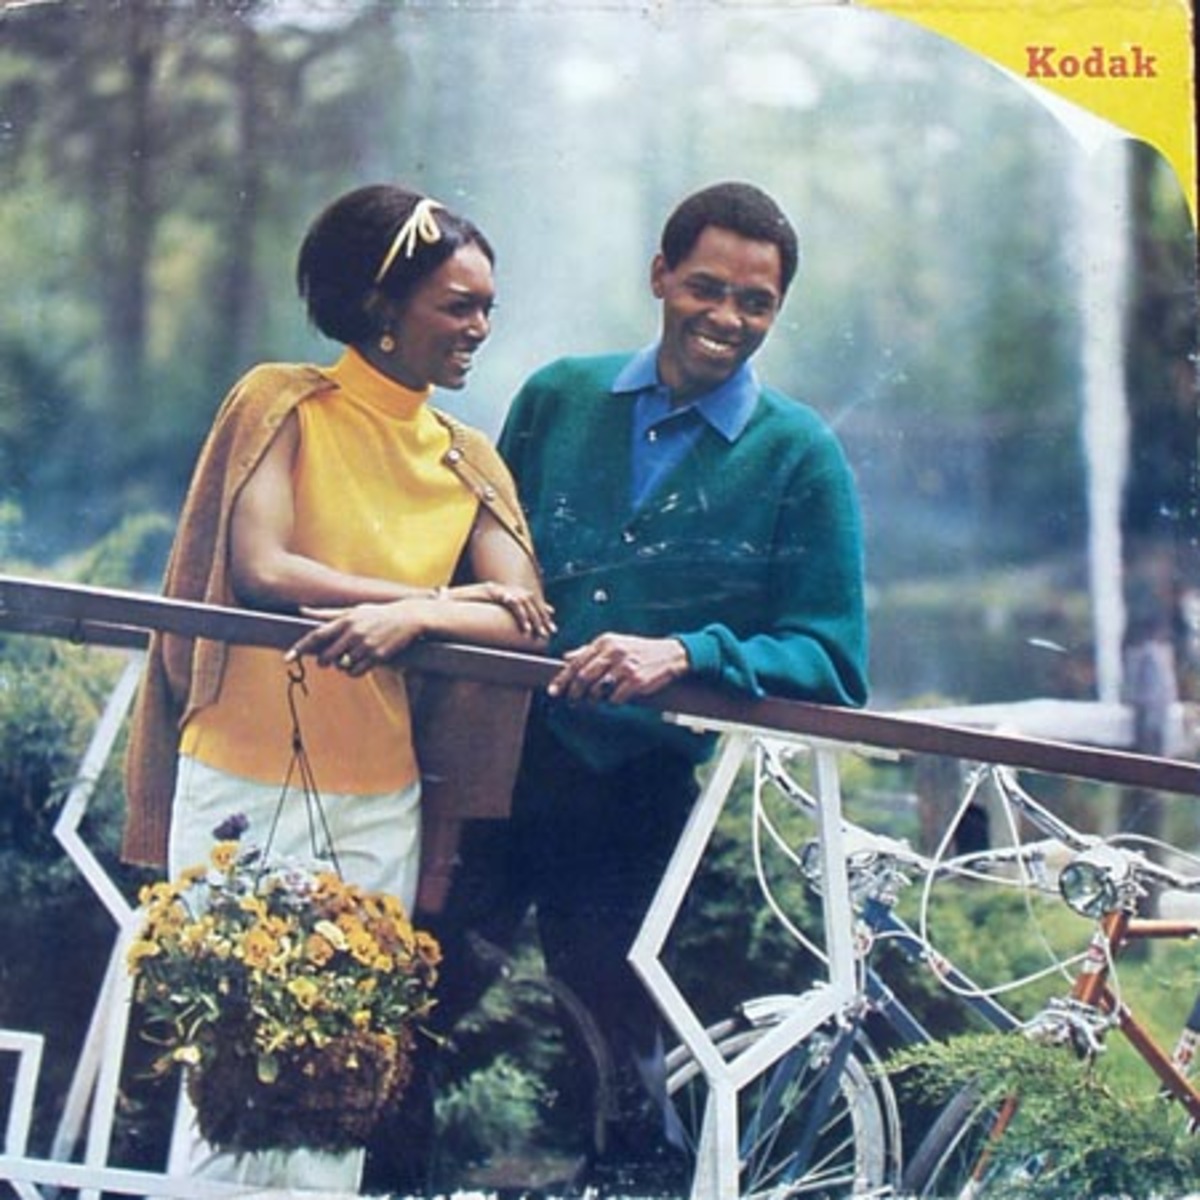 Kodak Film Original Advertising Poster African American Couple Bicycling